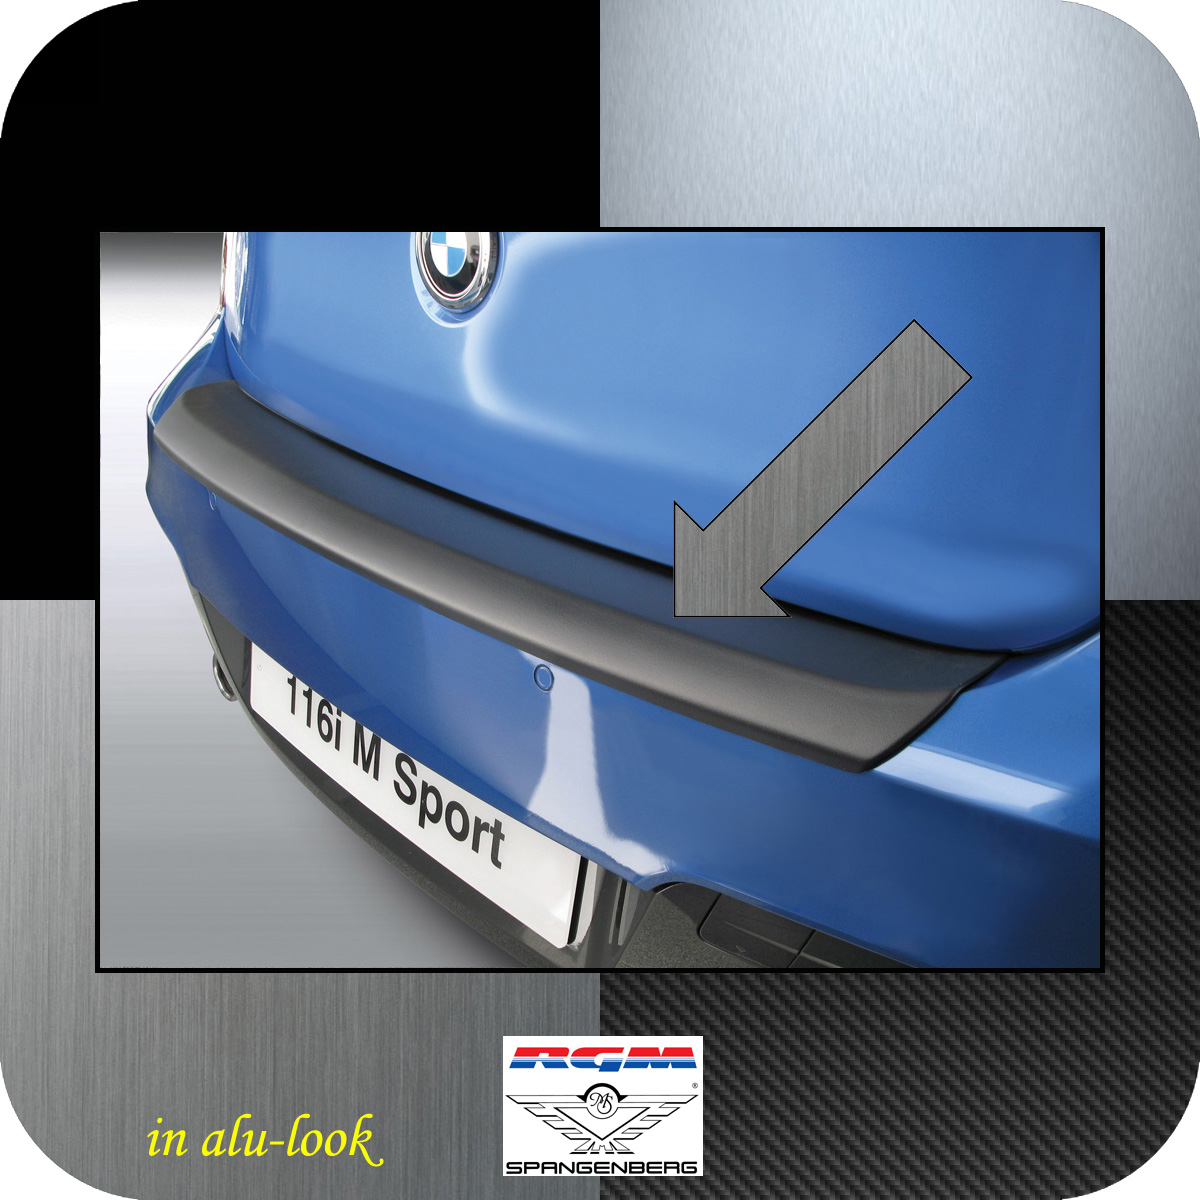 Ladekantenschutz Alu-Look BMW 1er F21 F20 M-Style vor Mopf 2011-2015 3504618